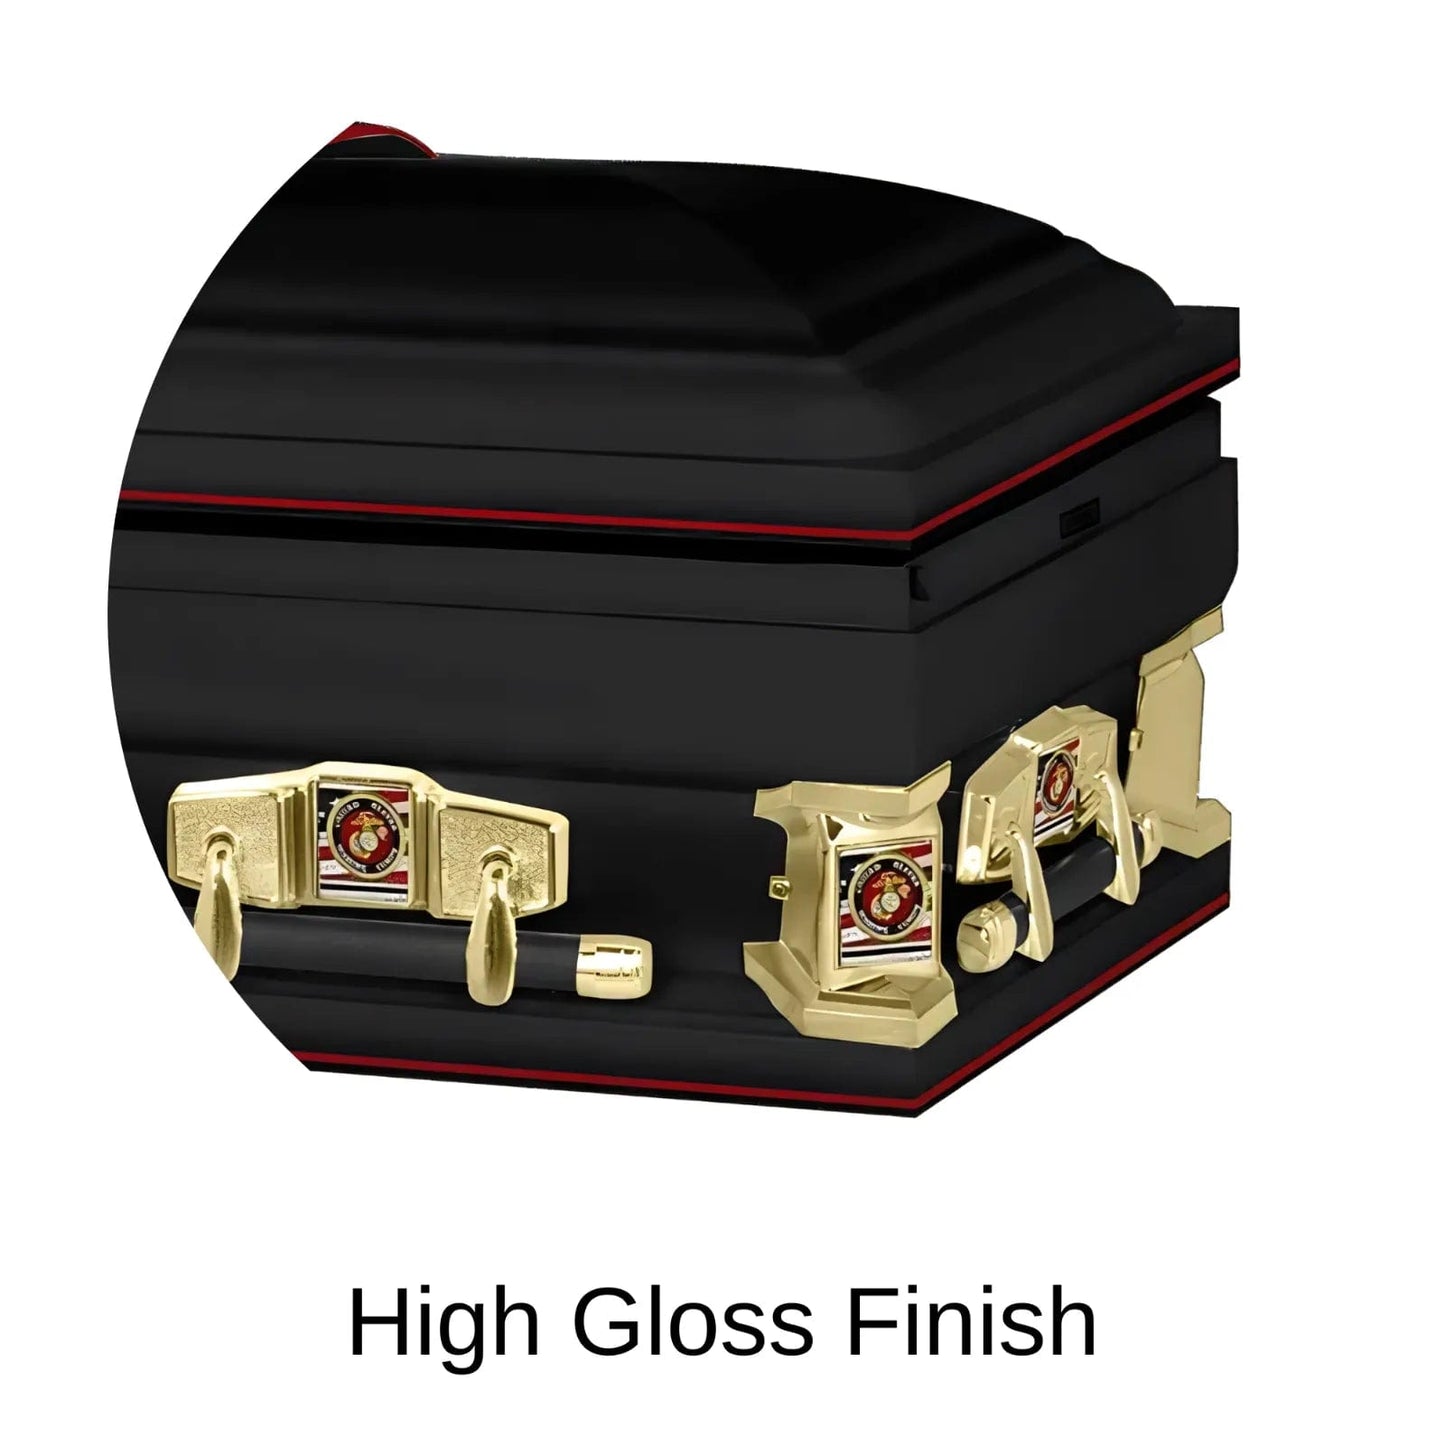 High Gloss Finish Titan Casket Veteran Select Black Oversize steel casket